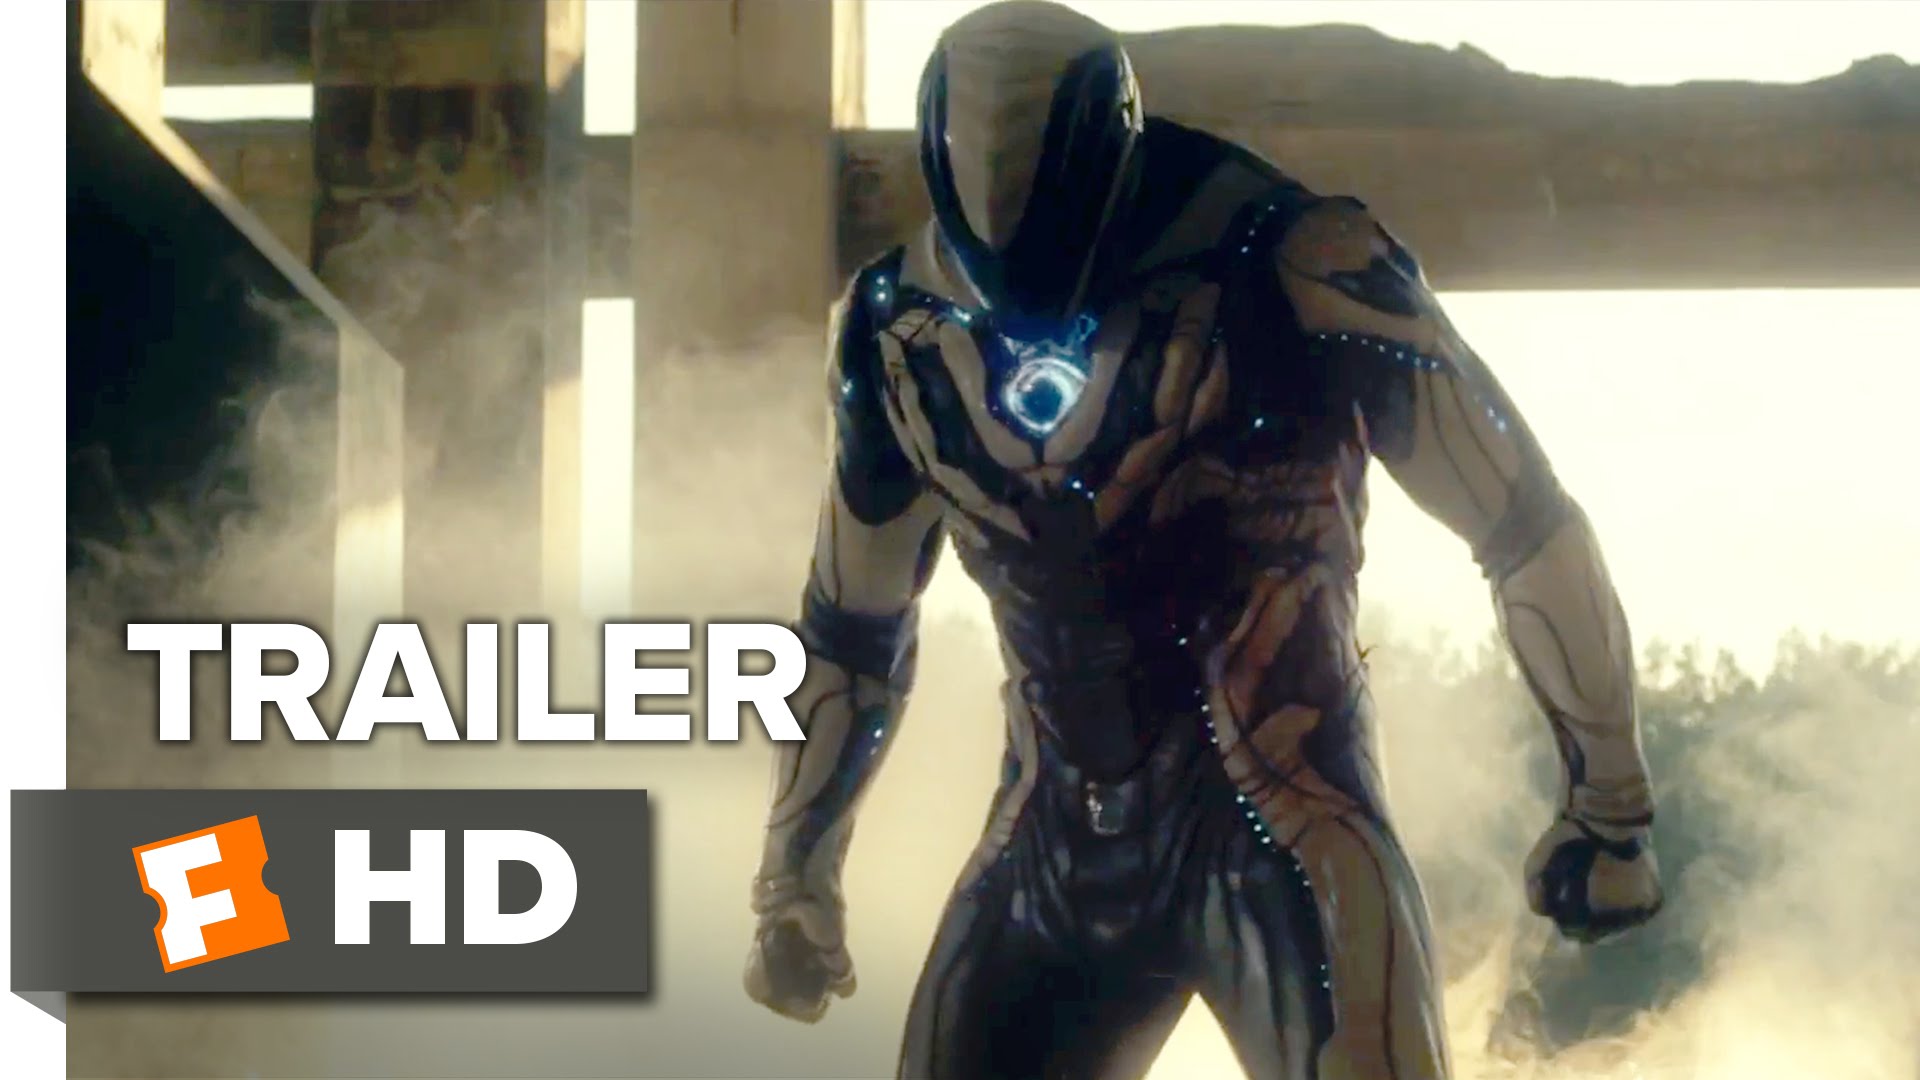 Max Steel Official Trailer 1 (2016) – Superhero Movie